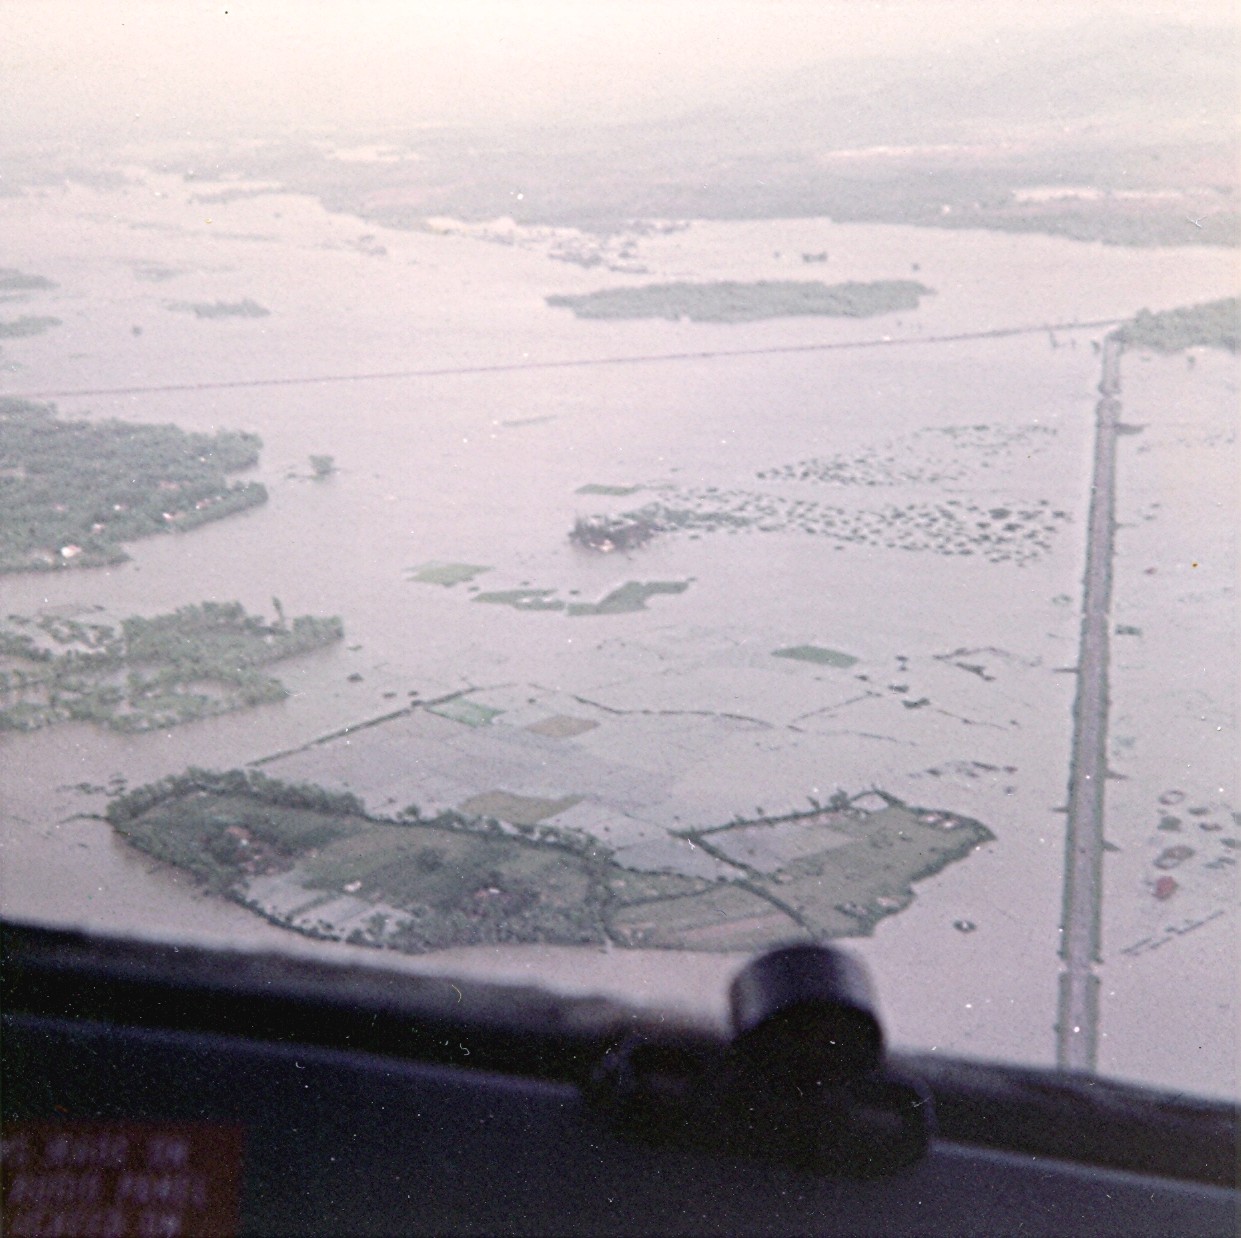 1968, October, Da Nang, Vietnam under flood waters as seen from the camera of Pan Am Flight Attendant, Maureen van Leeuwen while on a US troop transport flight in support of the Vietnam War effort.